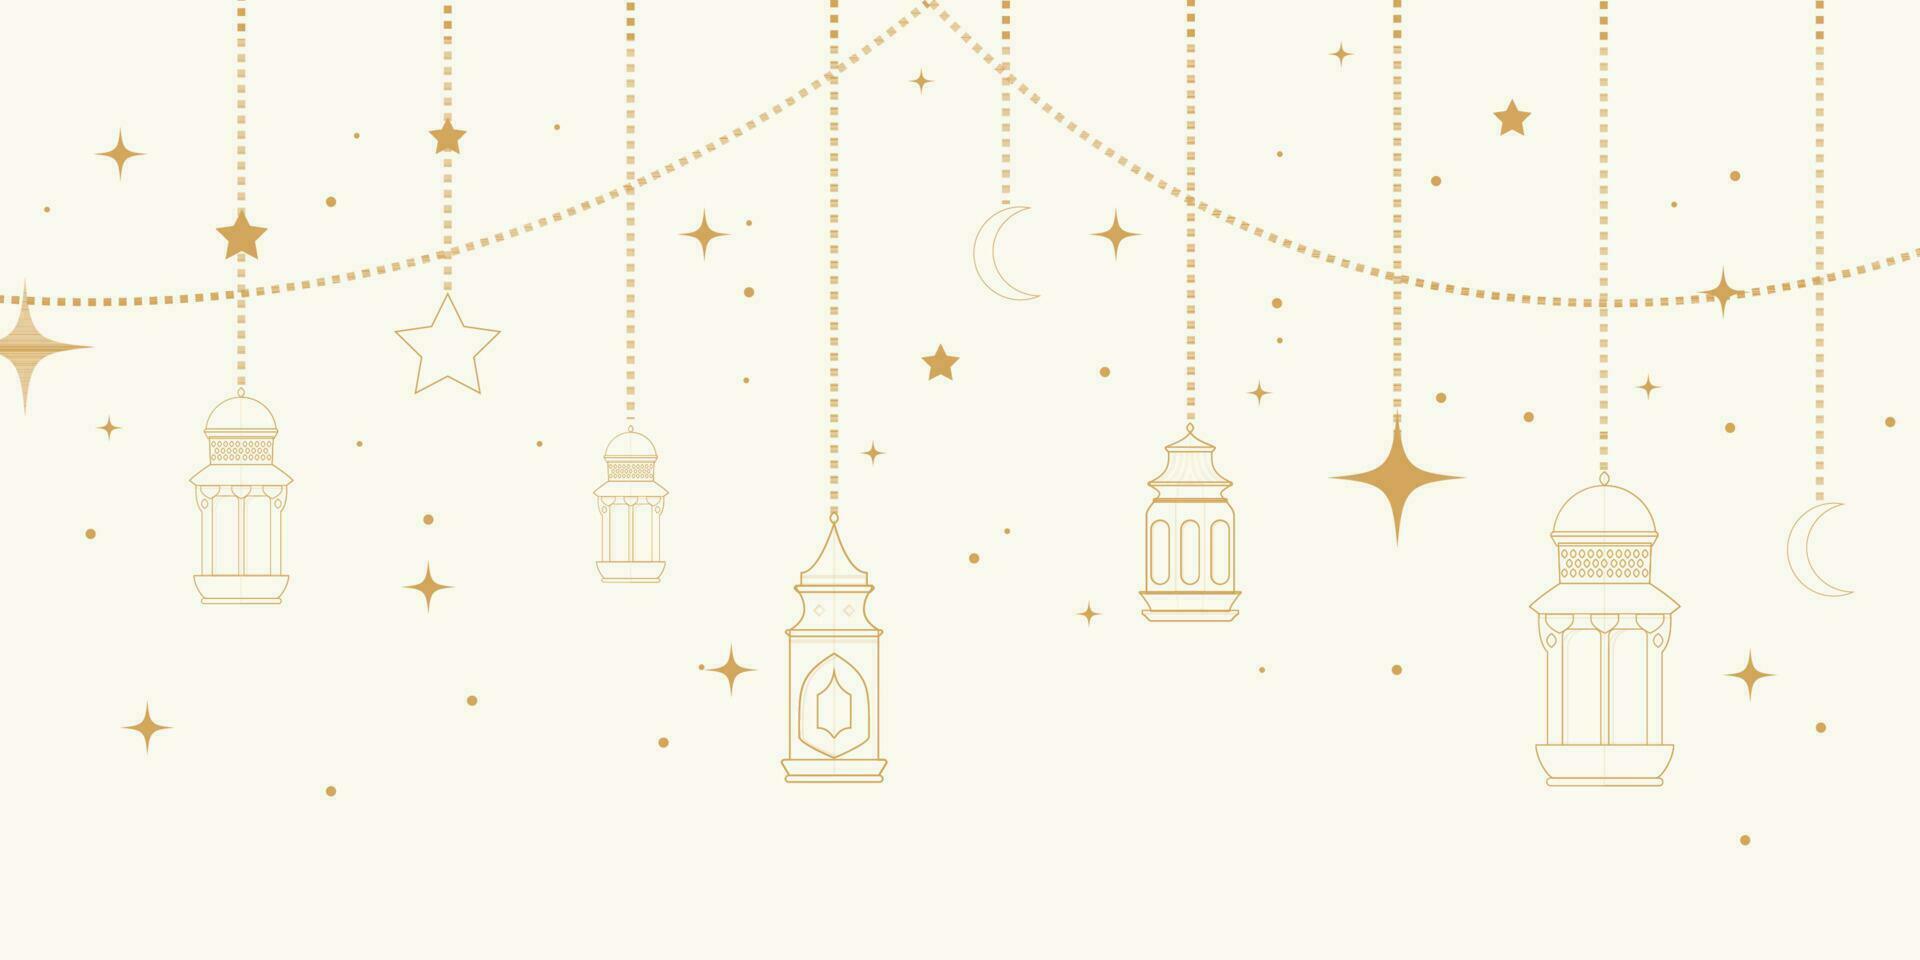 Muslim ornamental hanging golden lanterns, stars and moon vector illustration. Islamic oriental garland. Muslim holiday lantern traditional. Muslim ornamental hanging golden lanterns, stars and moon.